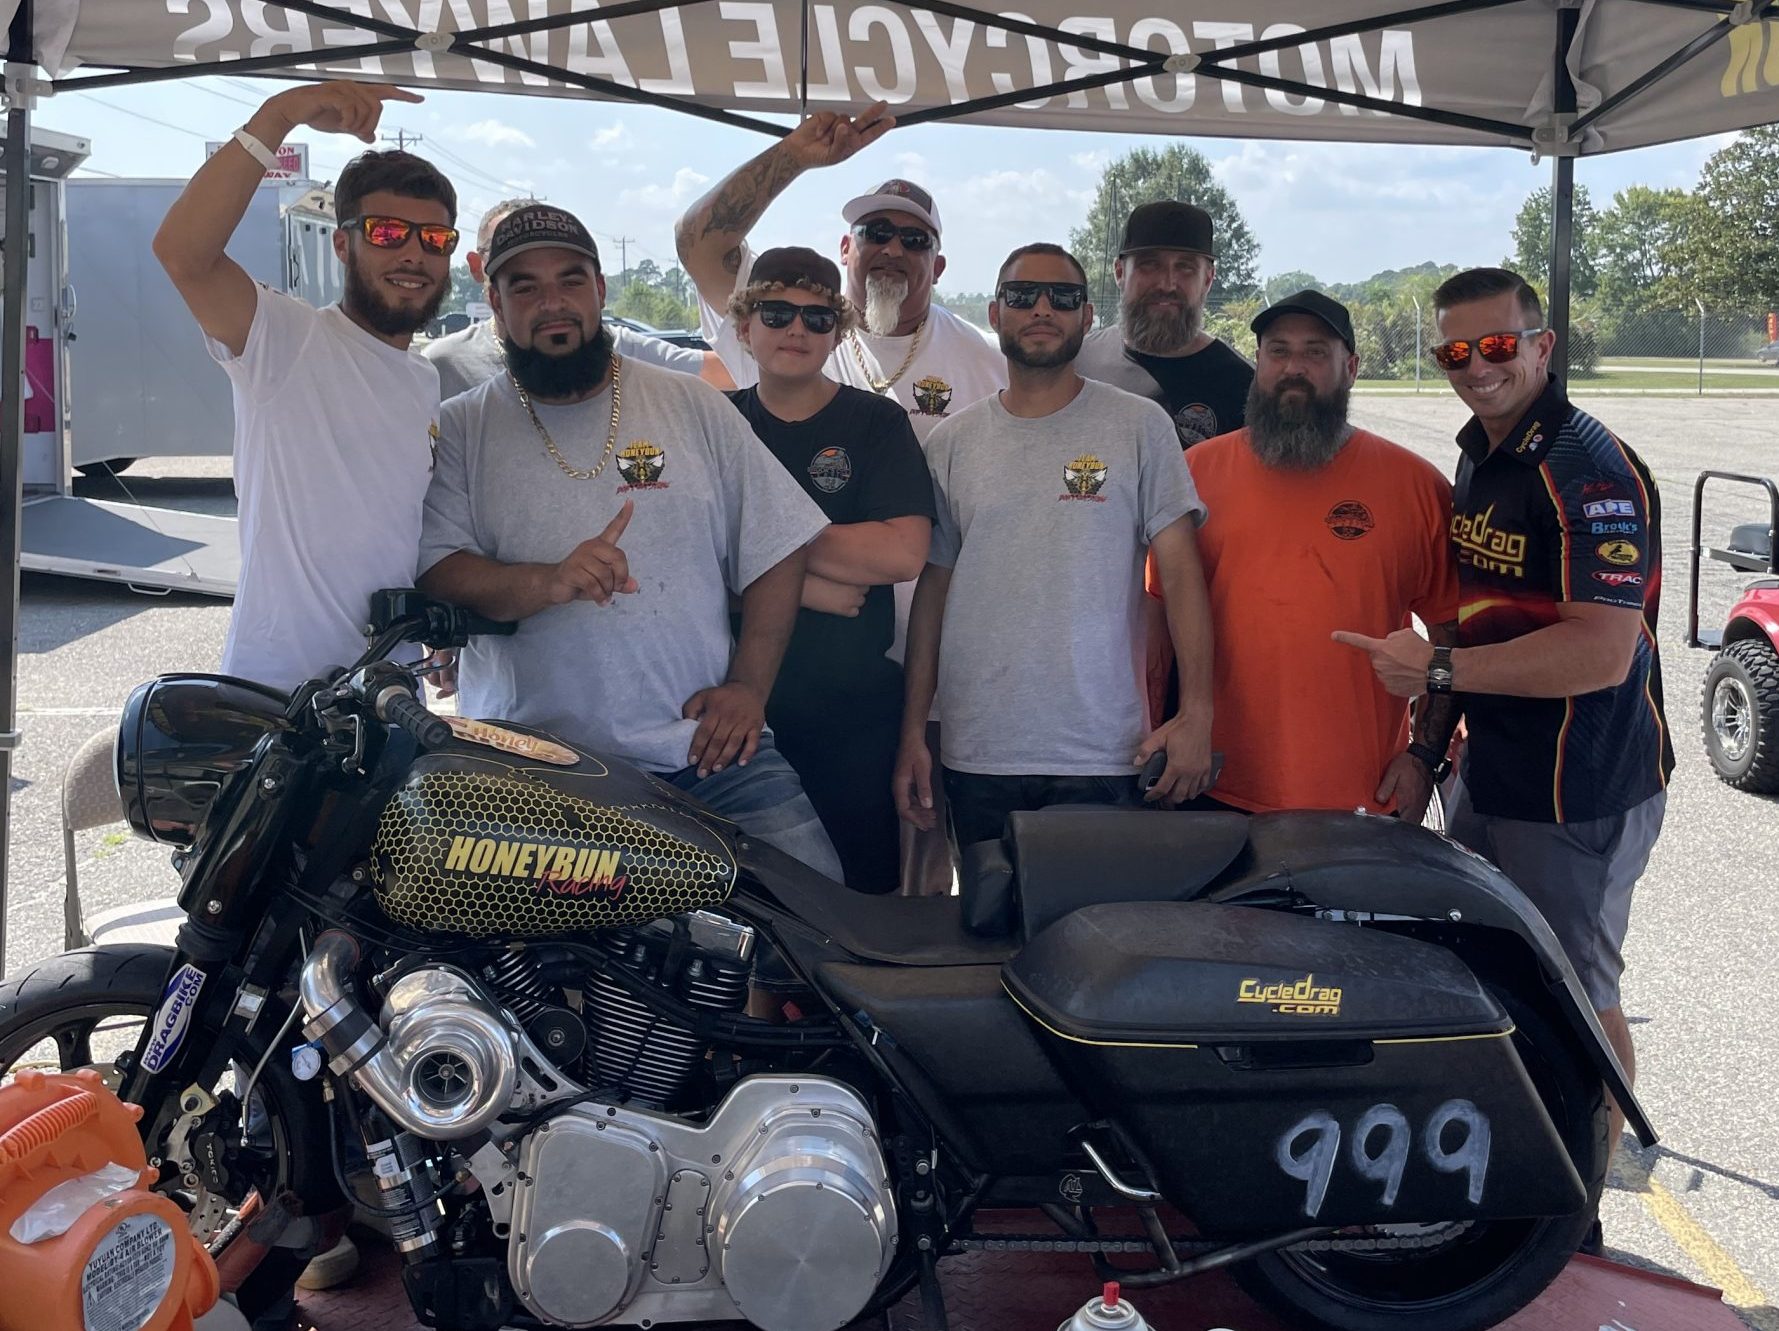 Team "Honeybun" Harley Bagger